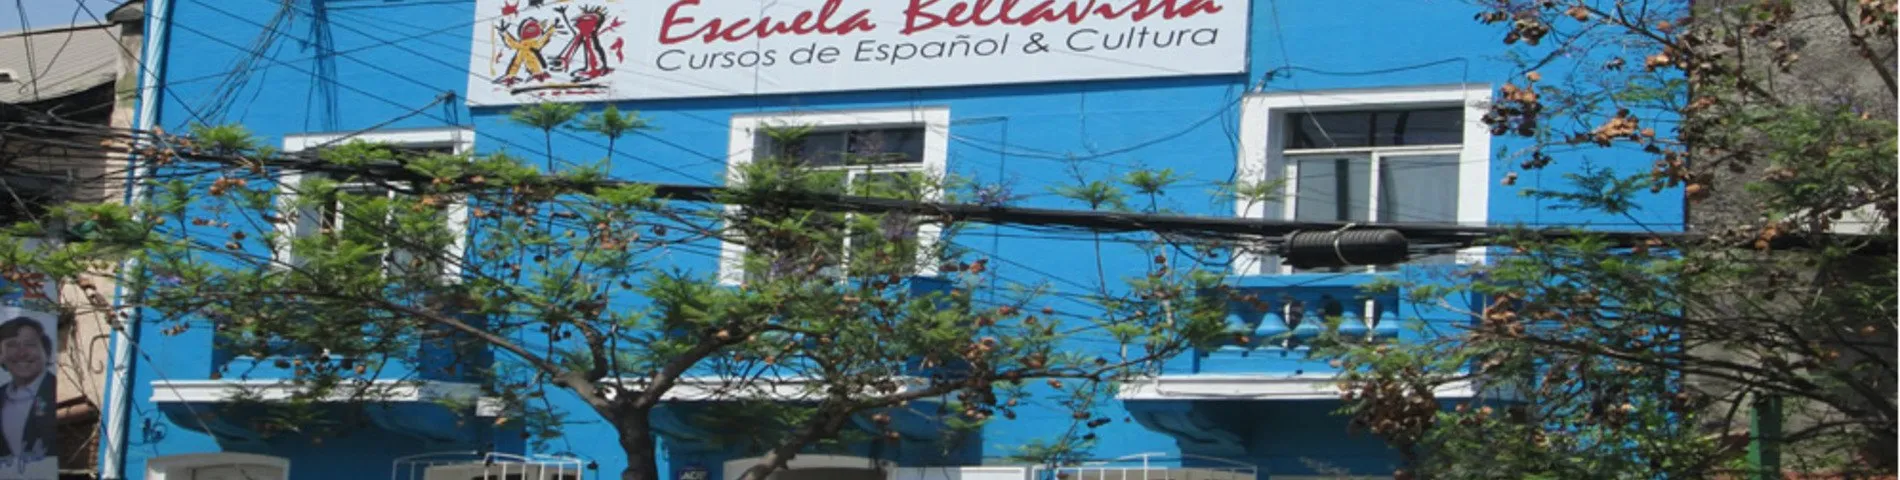 Escuela Bellavista bild 1